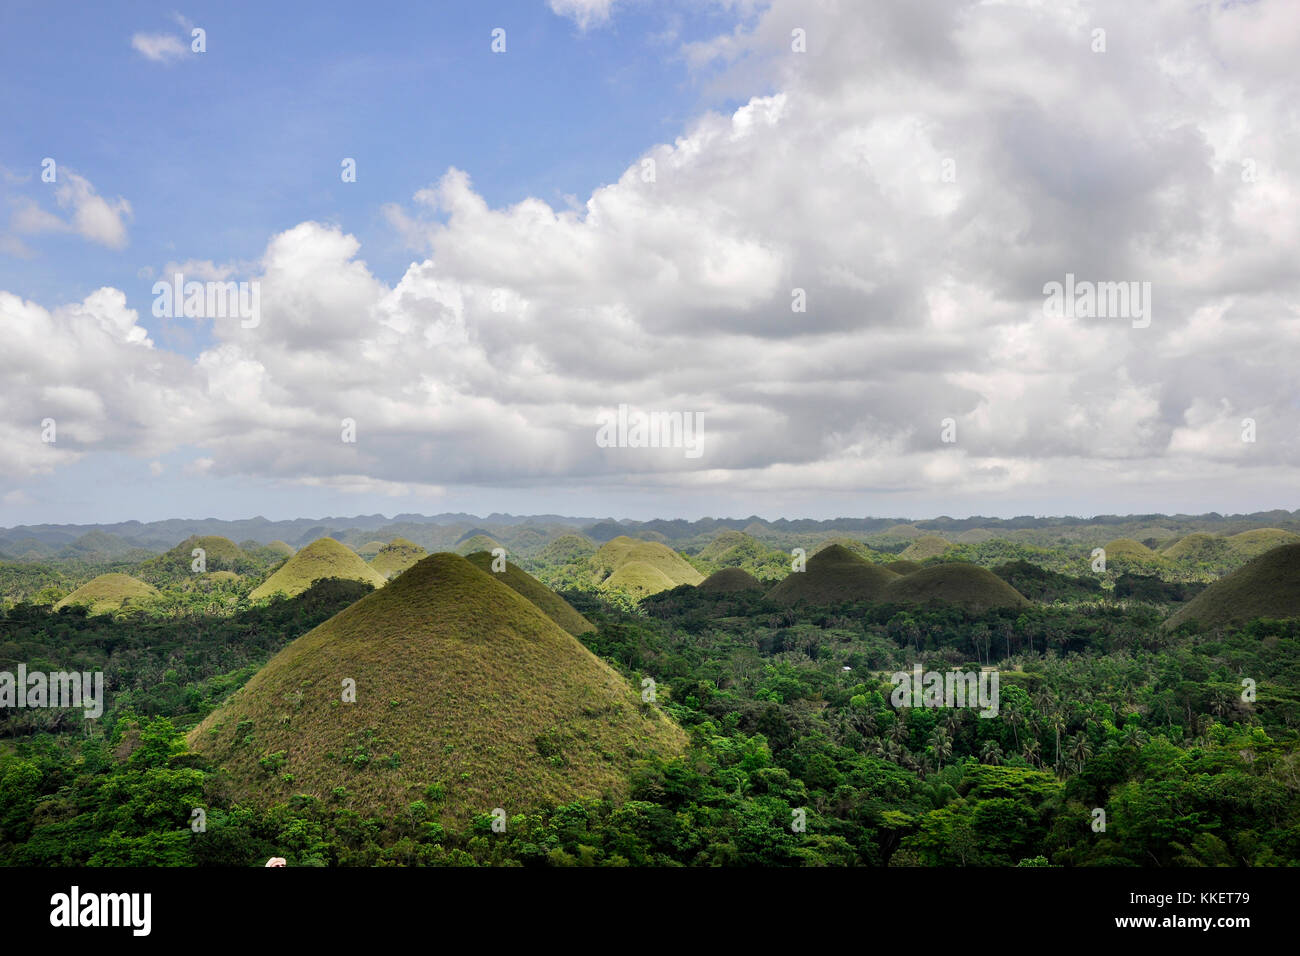 Philippines, Bohol Chocolate hills Stock Photo